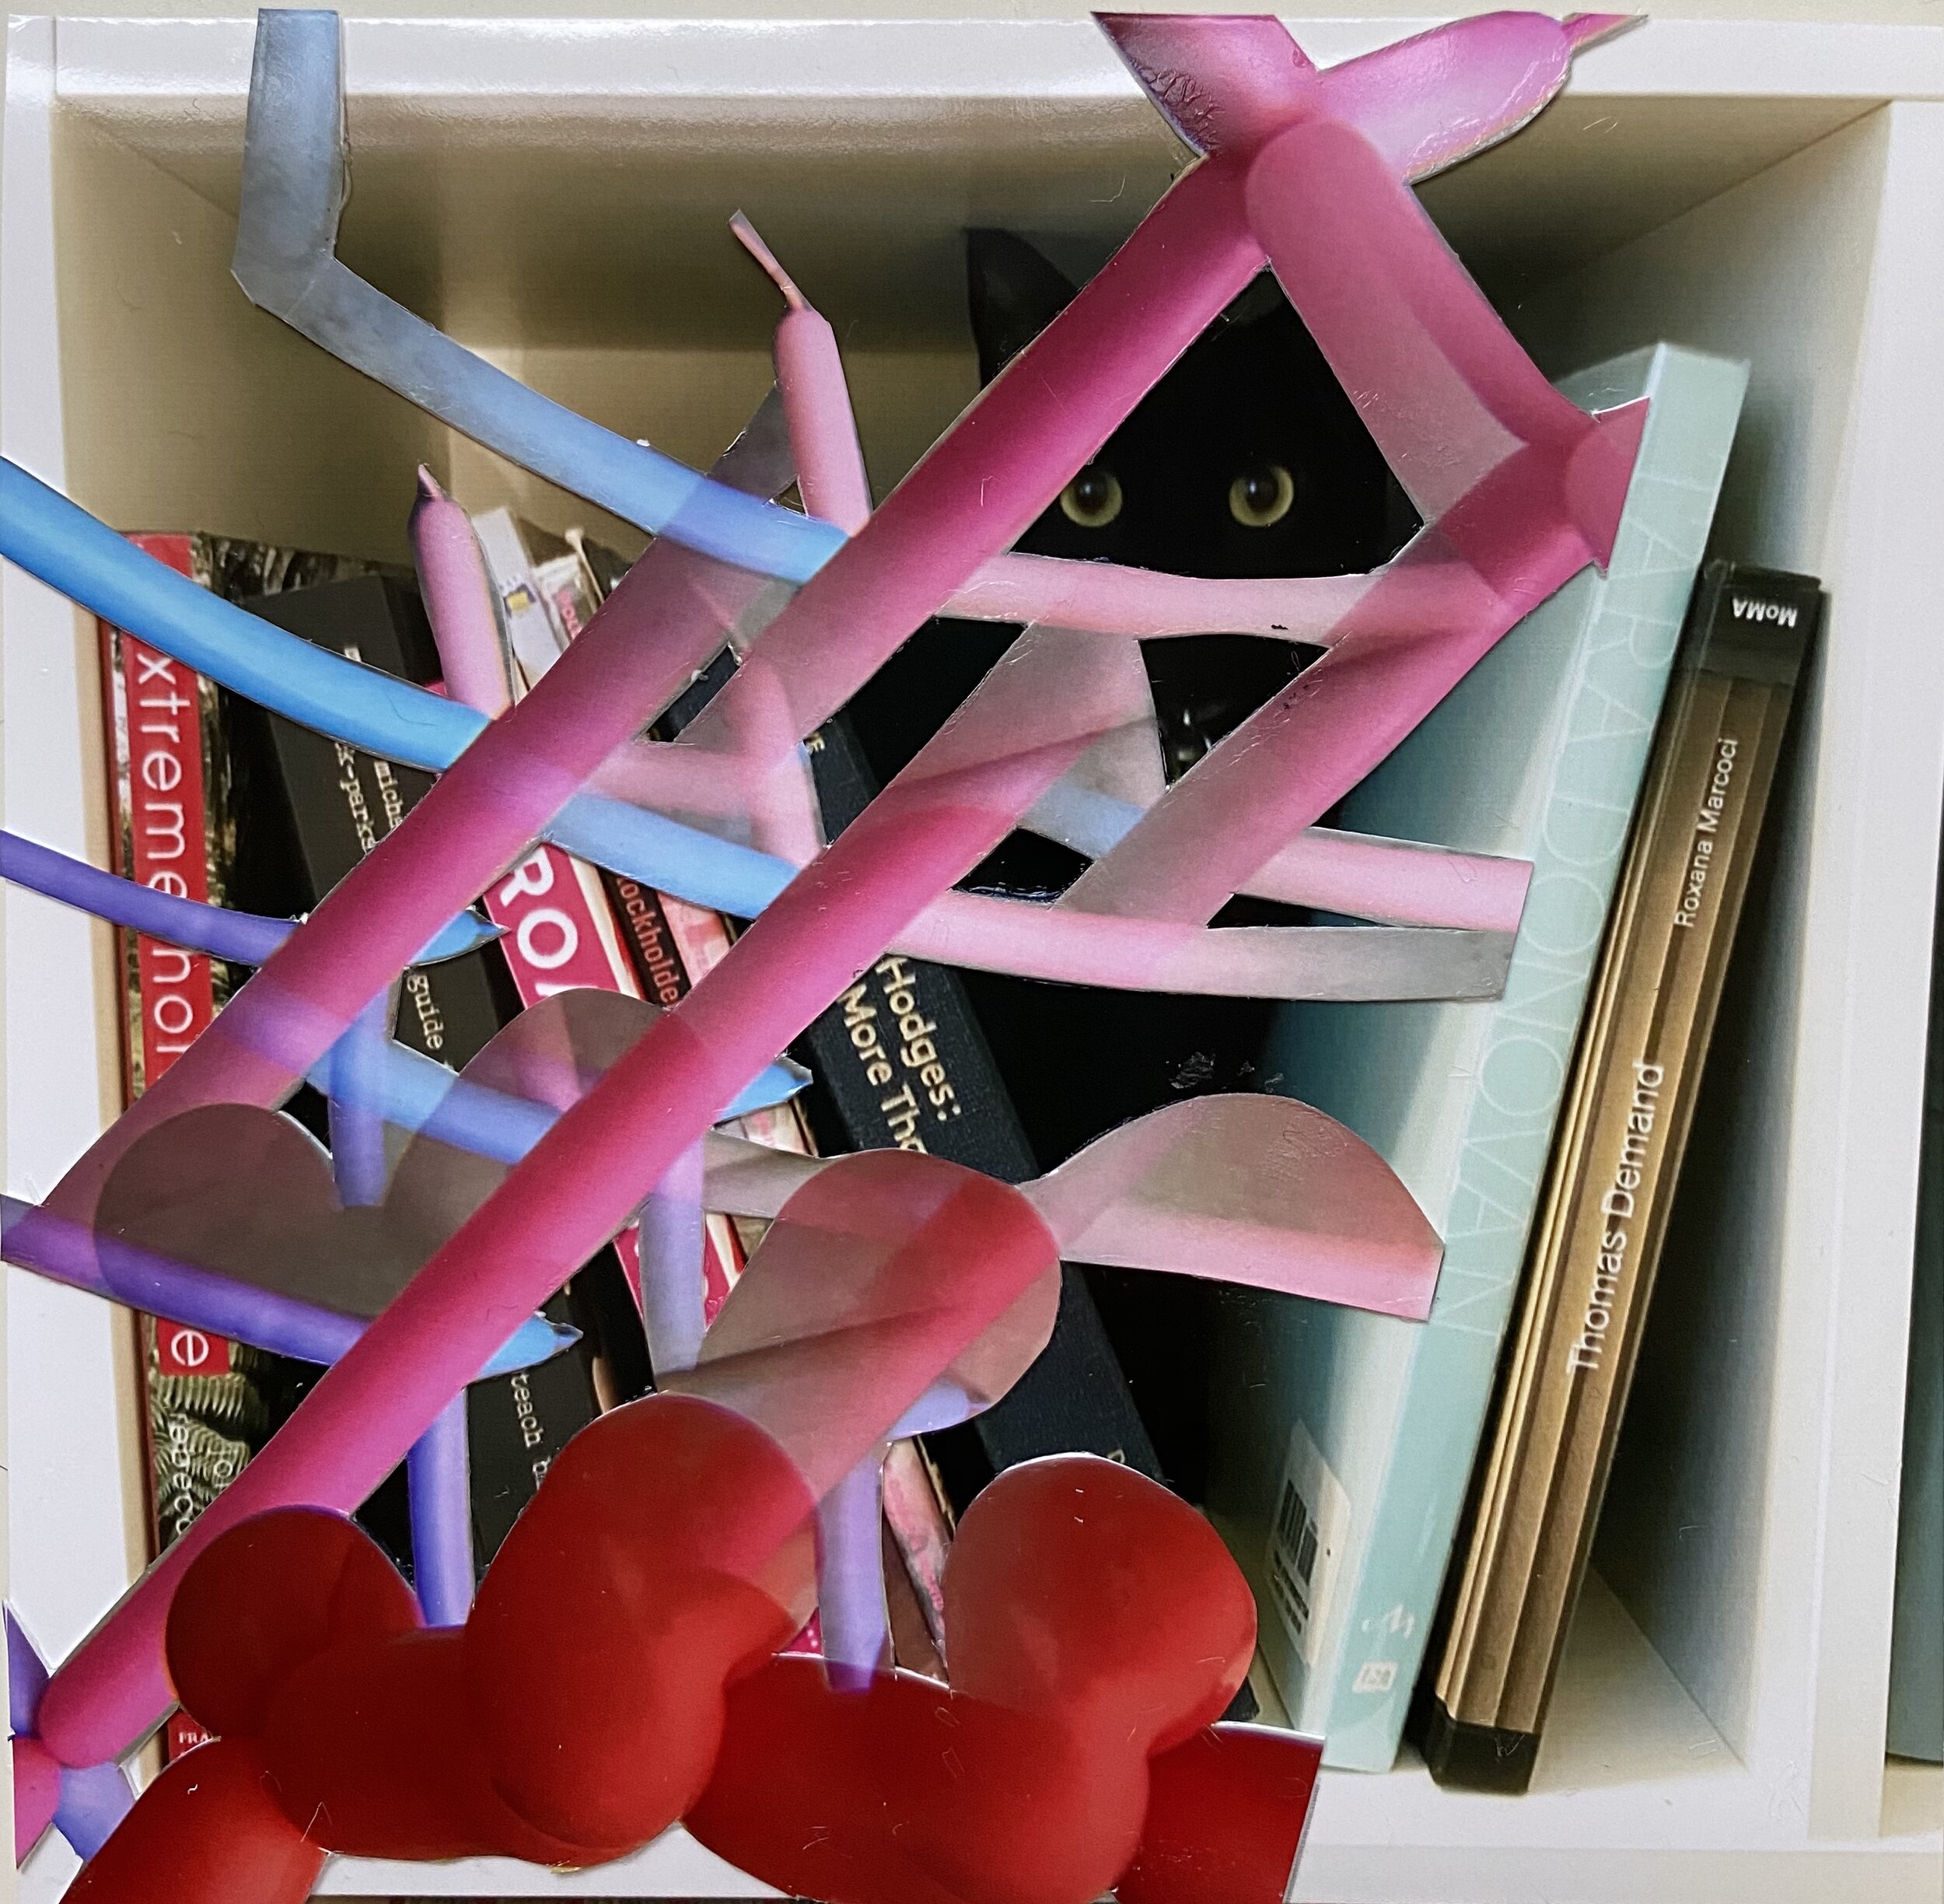 bookshelf and balloons